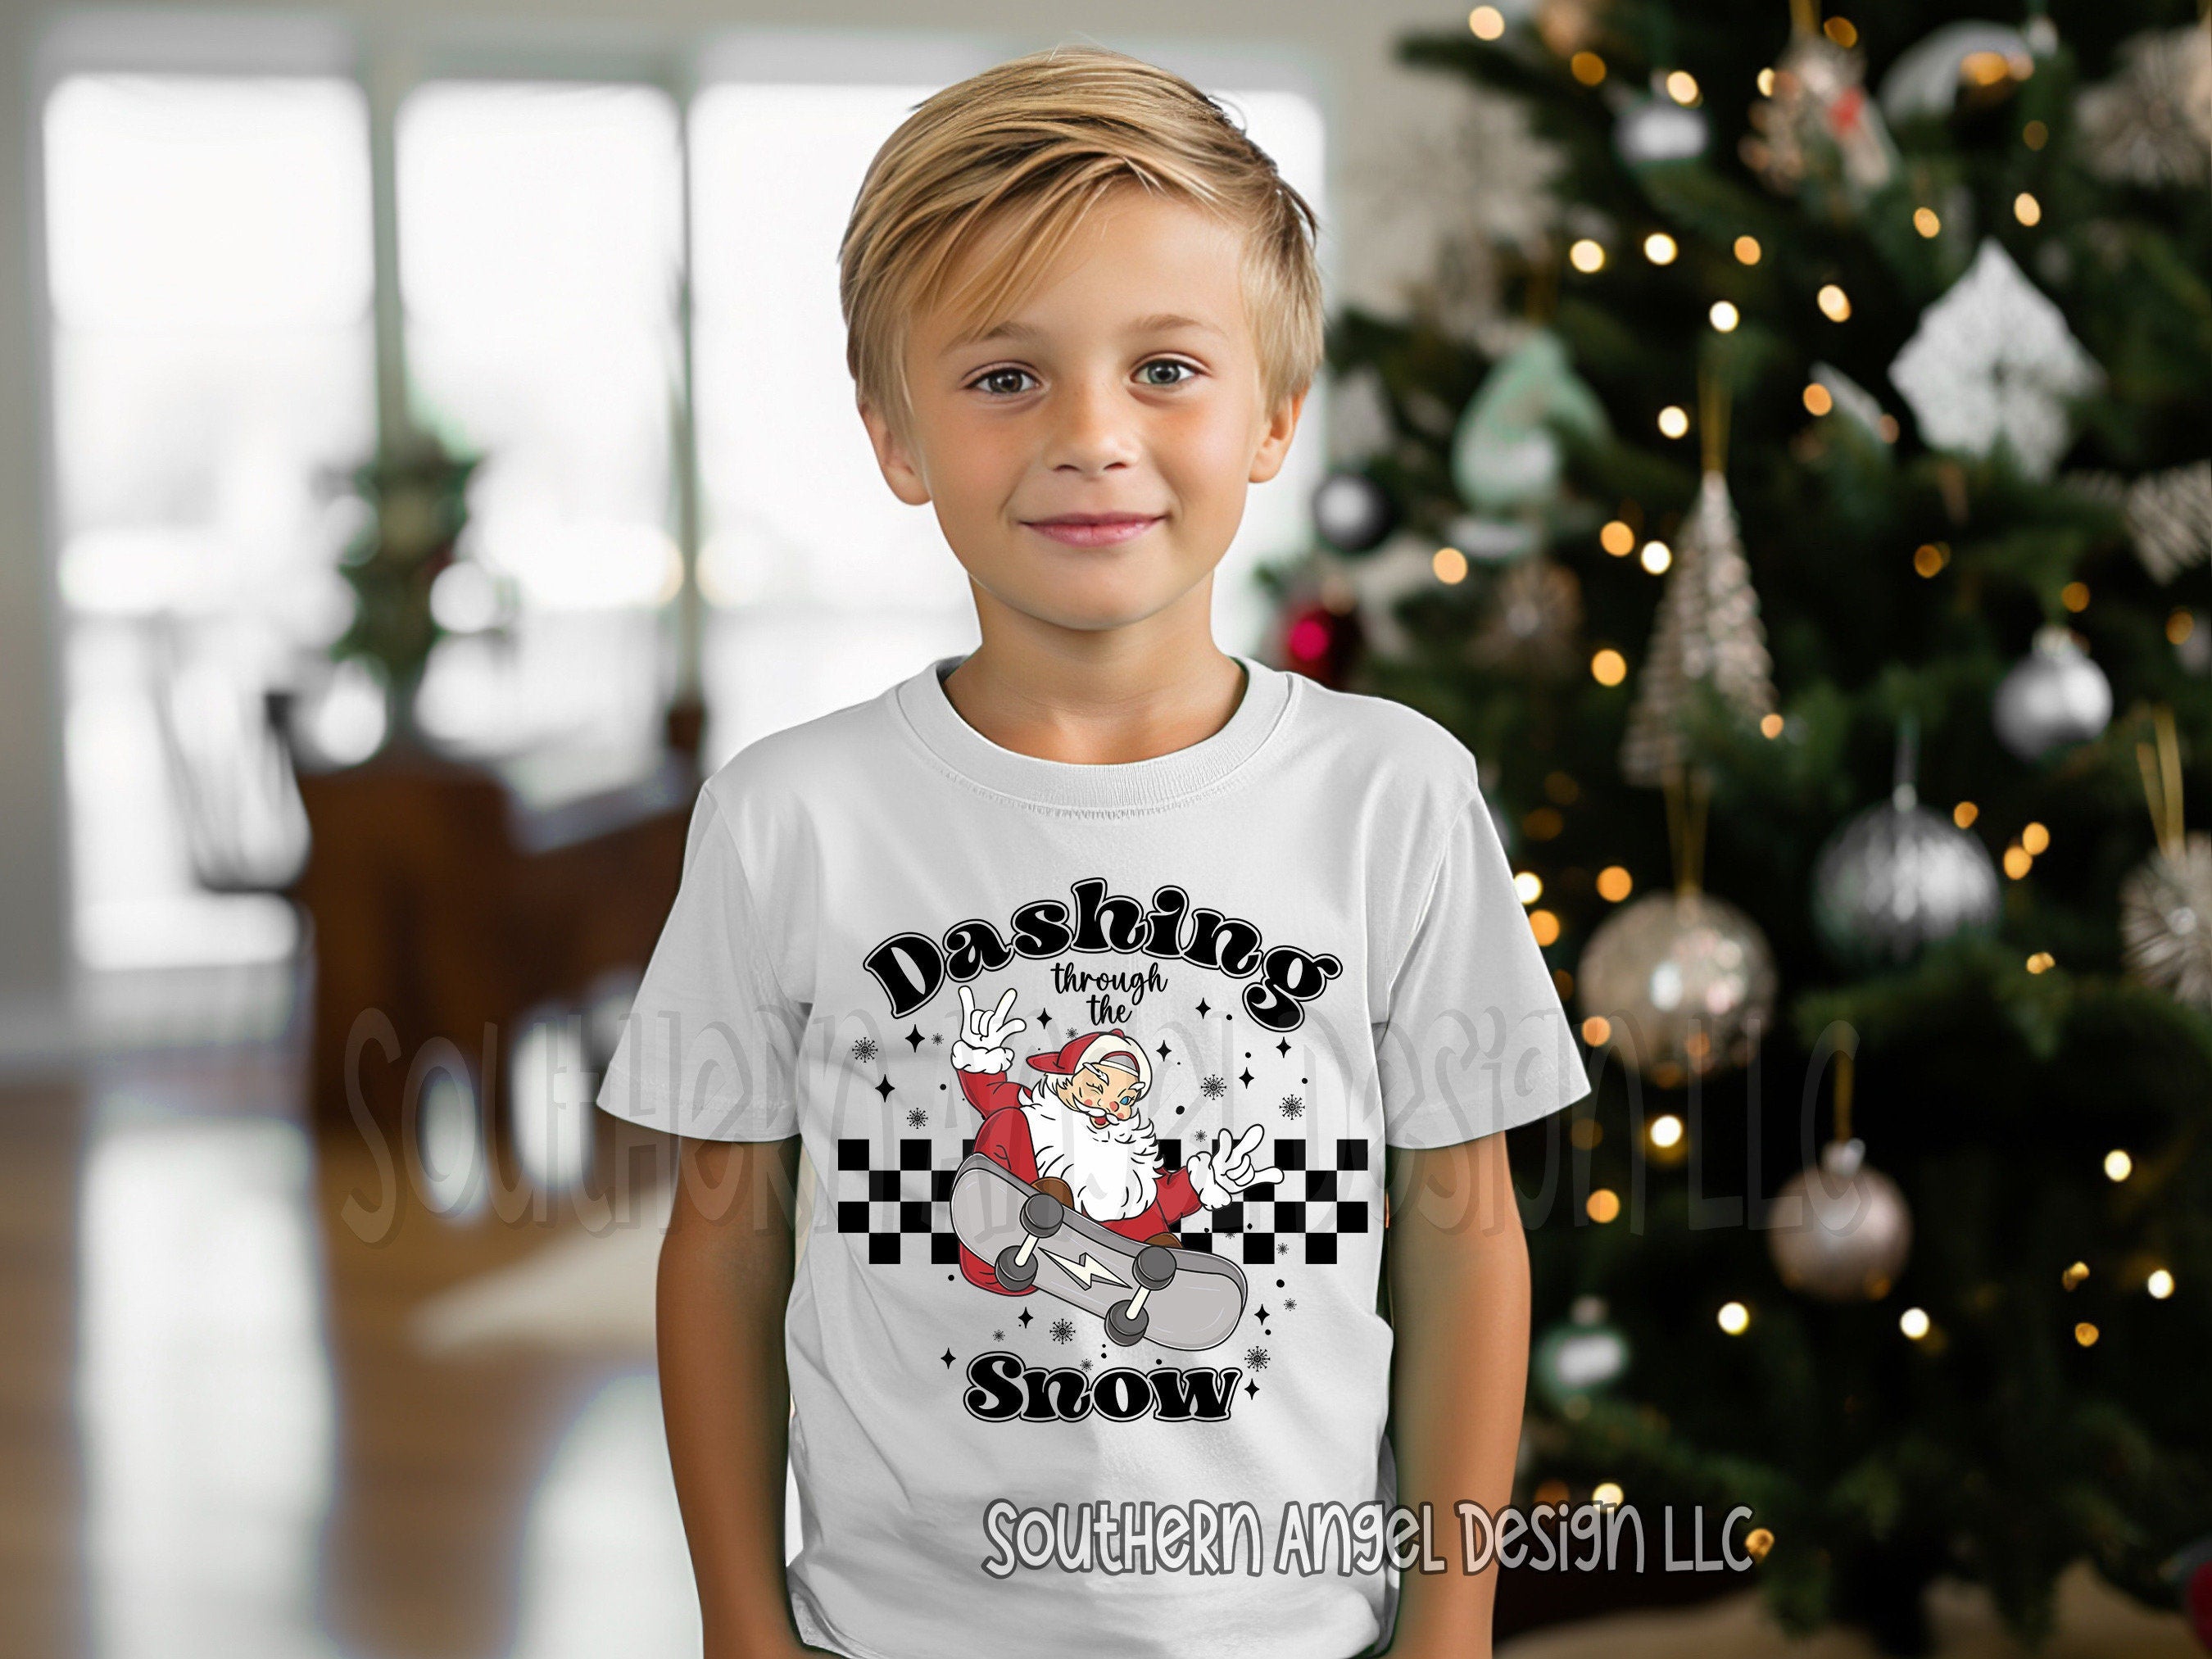 Snowman shirt, Boy’s Christmas shirt, Retro Christmas shirt, Toddler Christmas shirt, Personalized Christmas shirt